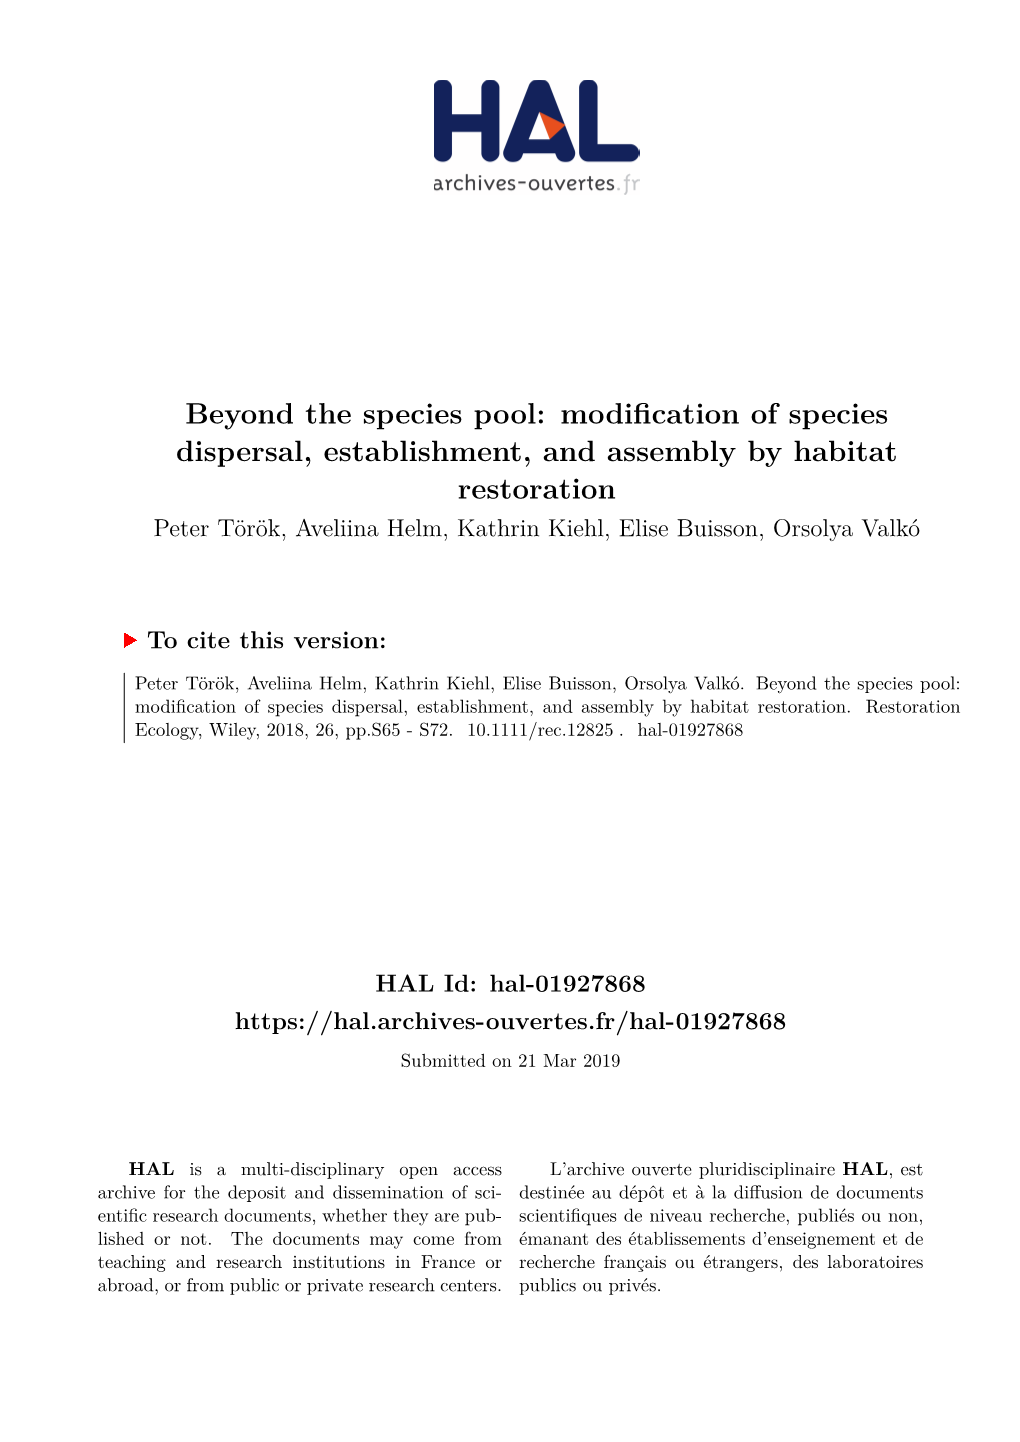 Modification of Species Dispersal, Establishment, and Assembly by Habitat Restoration Peter Török, Aveliina Helm, Kathrin Kiehl, Elise Buisson, Orsolya Valkó